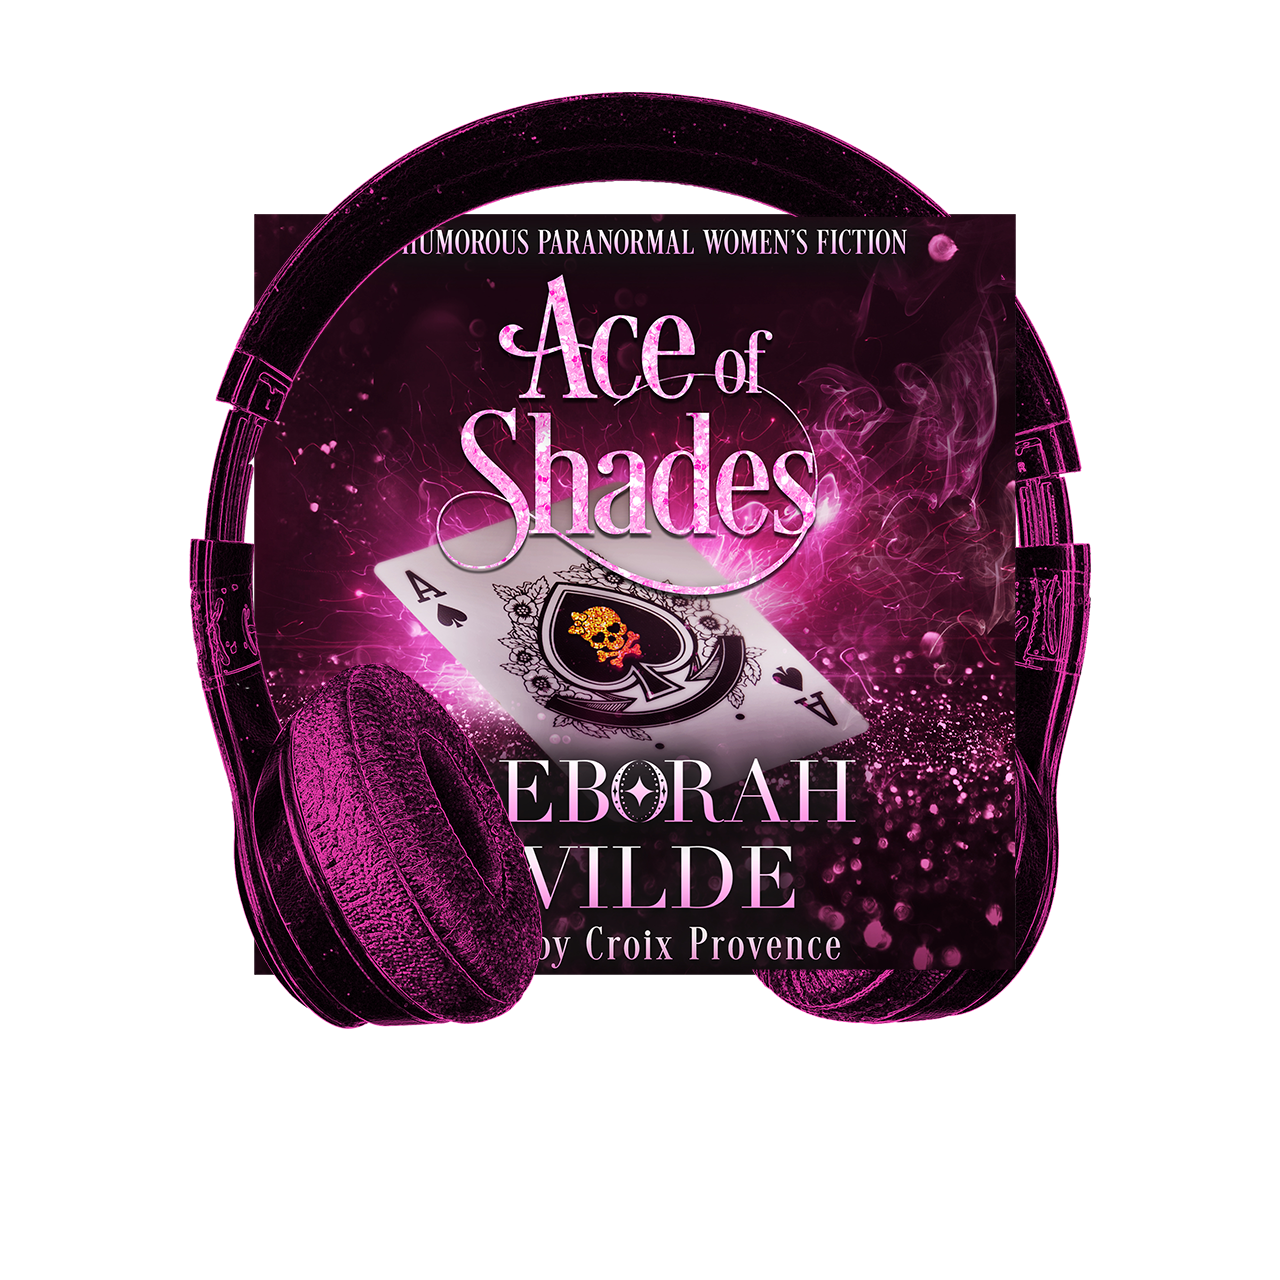 Ace of Shades (Magic After Midlife #7) Audiobook - Deborah Wilde Books - urban fantasy